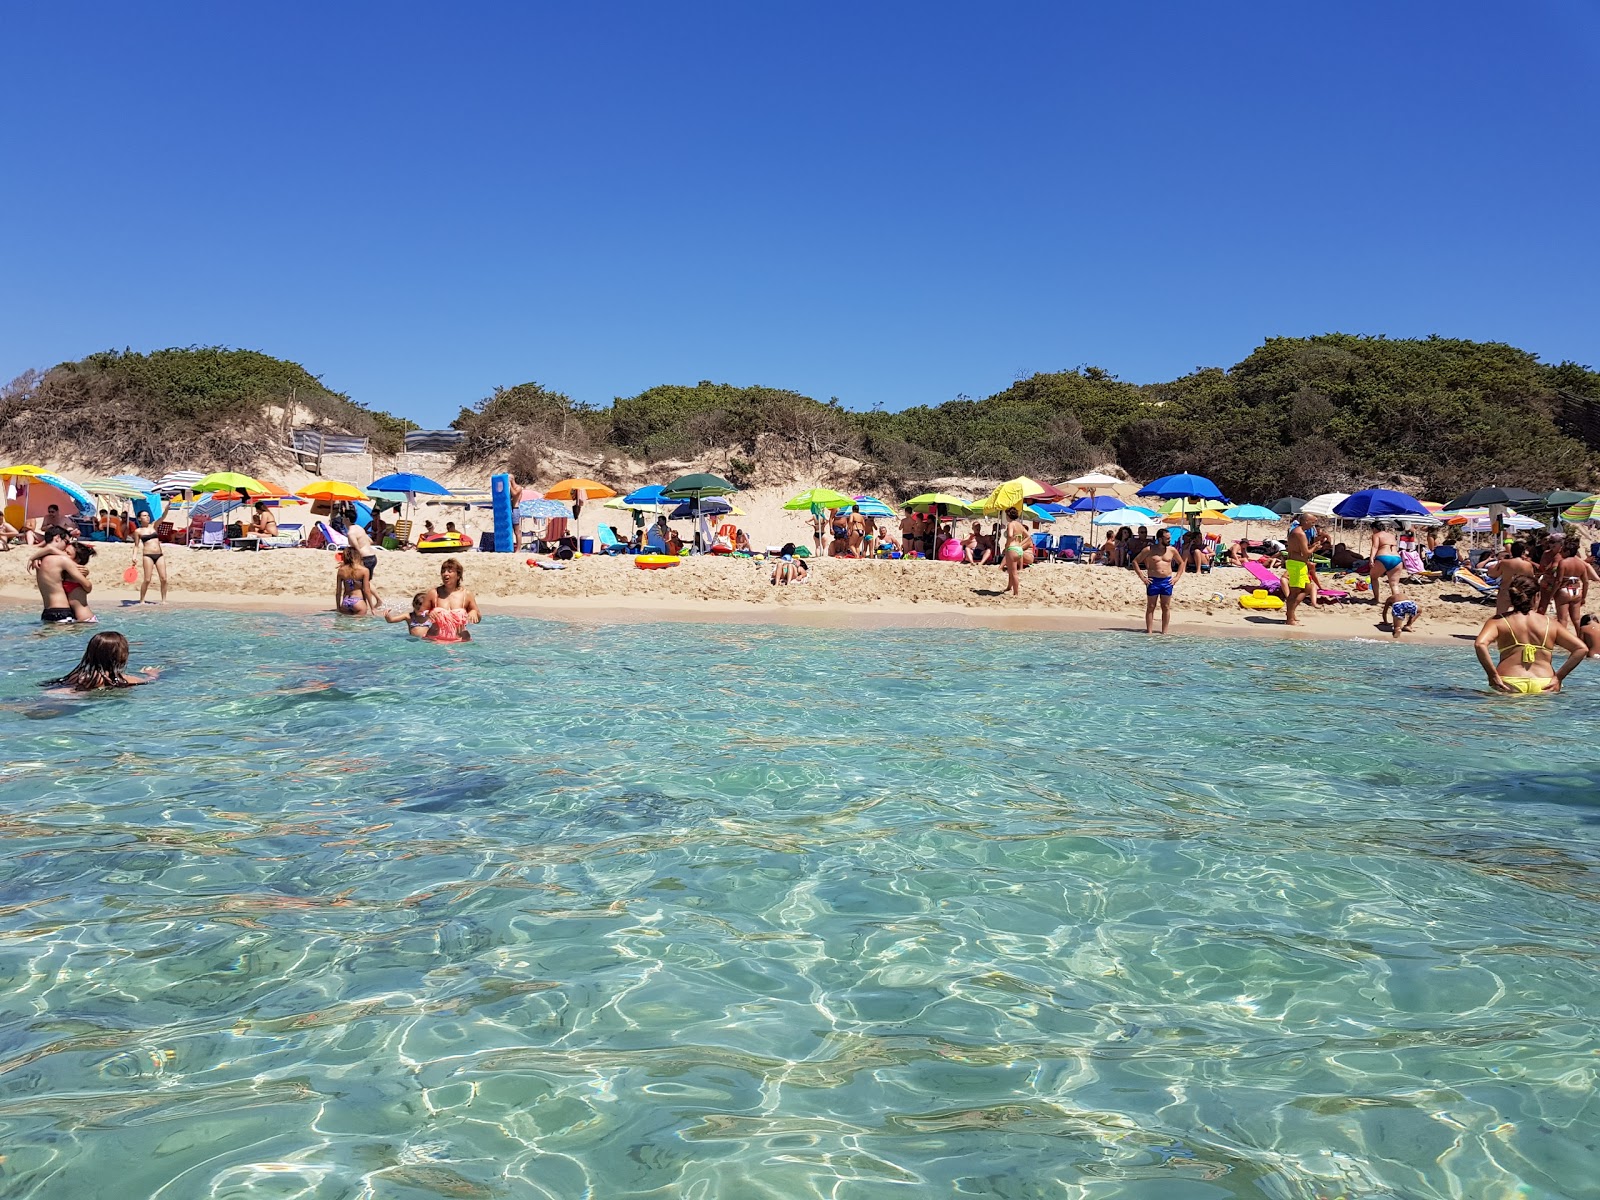 Spiaggia di Punta Prosciutto'in fotoğrafı plaj tatil beldesi alanı